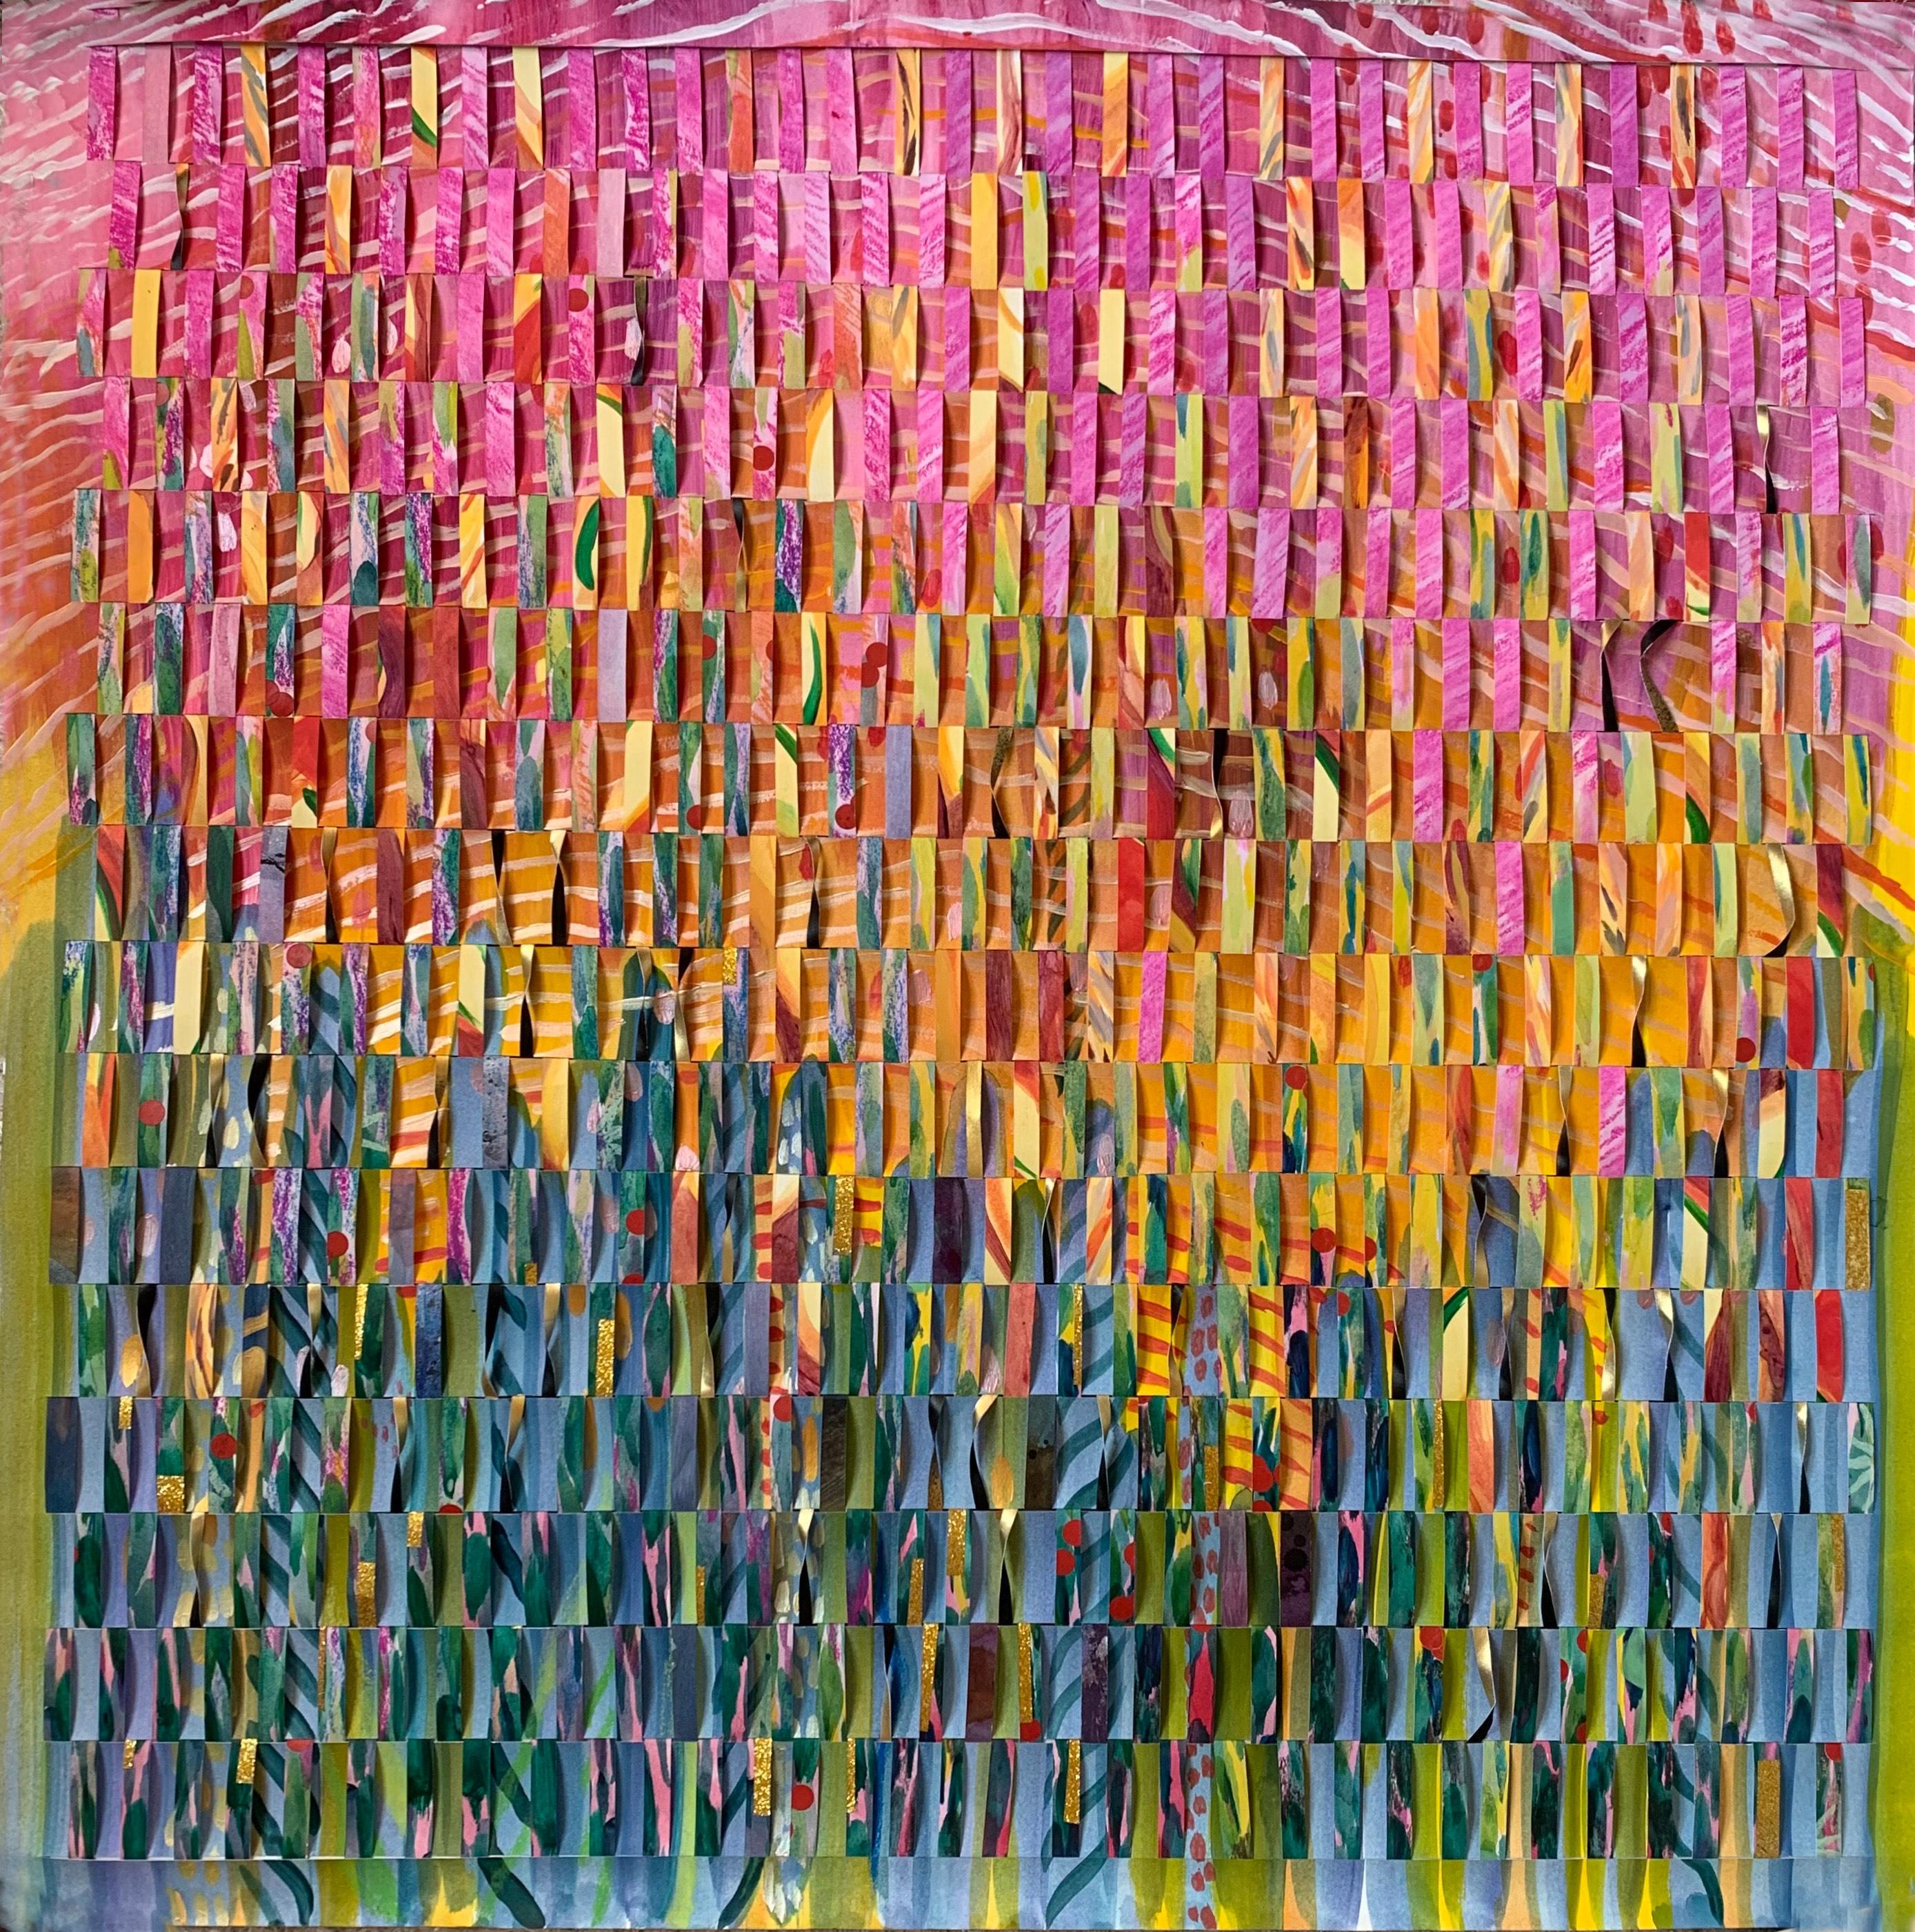 Colourful Mixed Media on Woven Fabriano Painting "Remembrance" - Mixed Media Art by Anushka Kempken